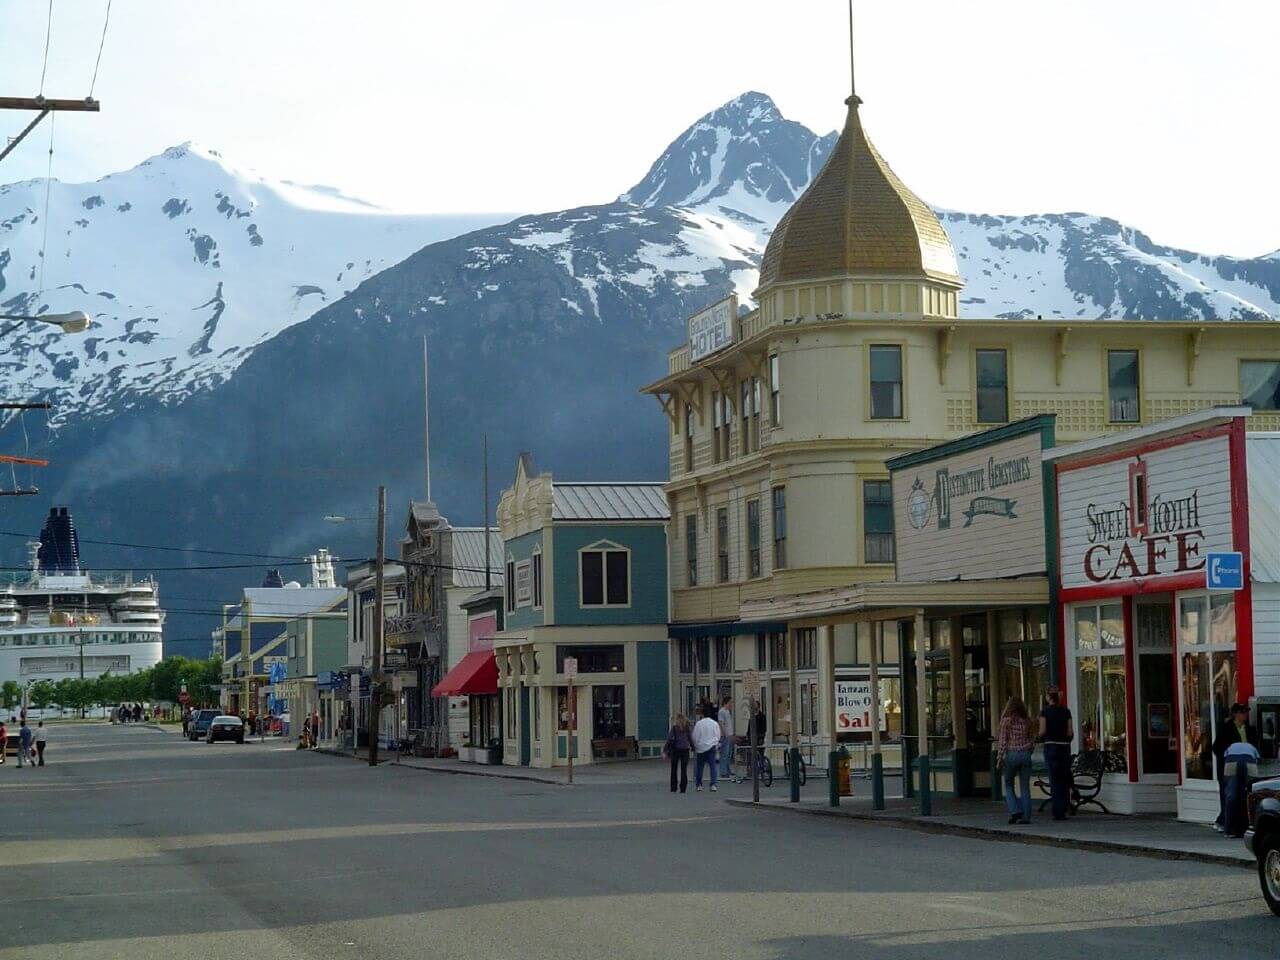 The streets of present-day Skagway, Alaska.